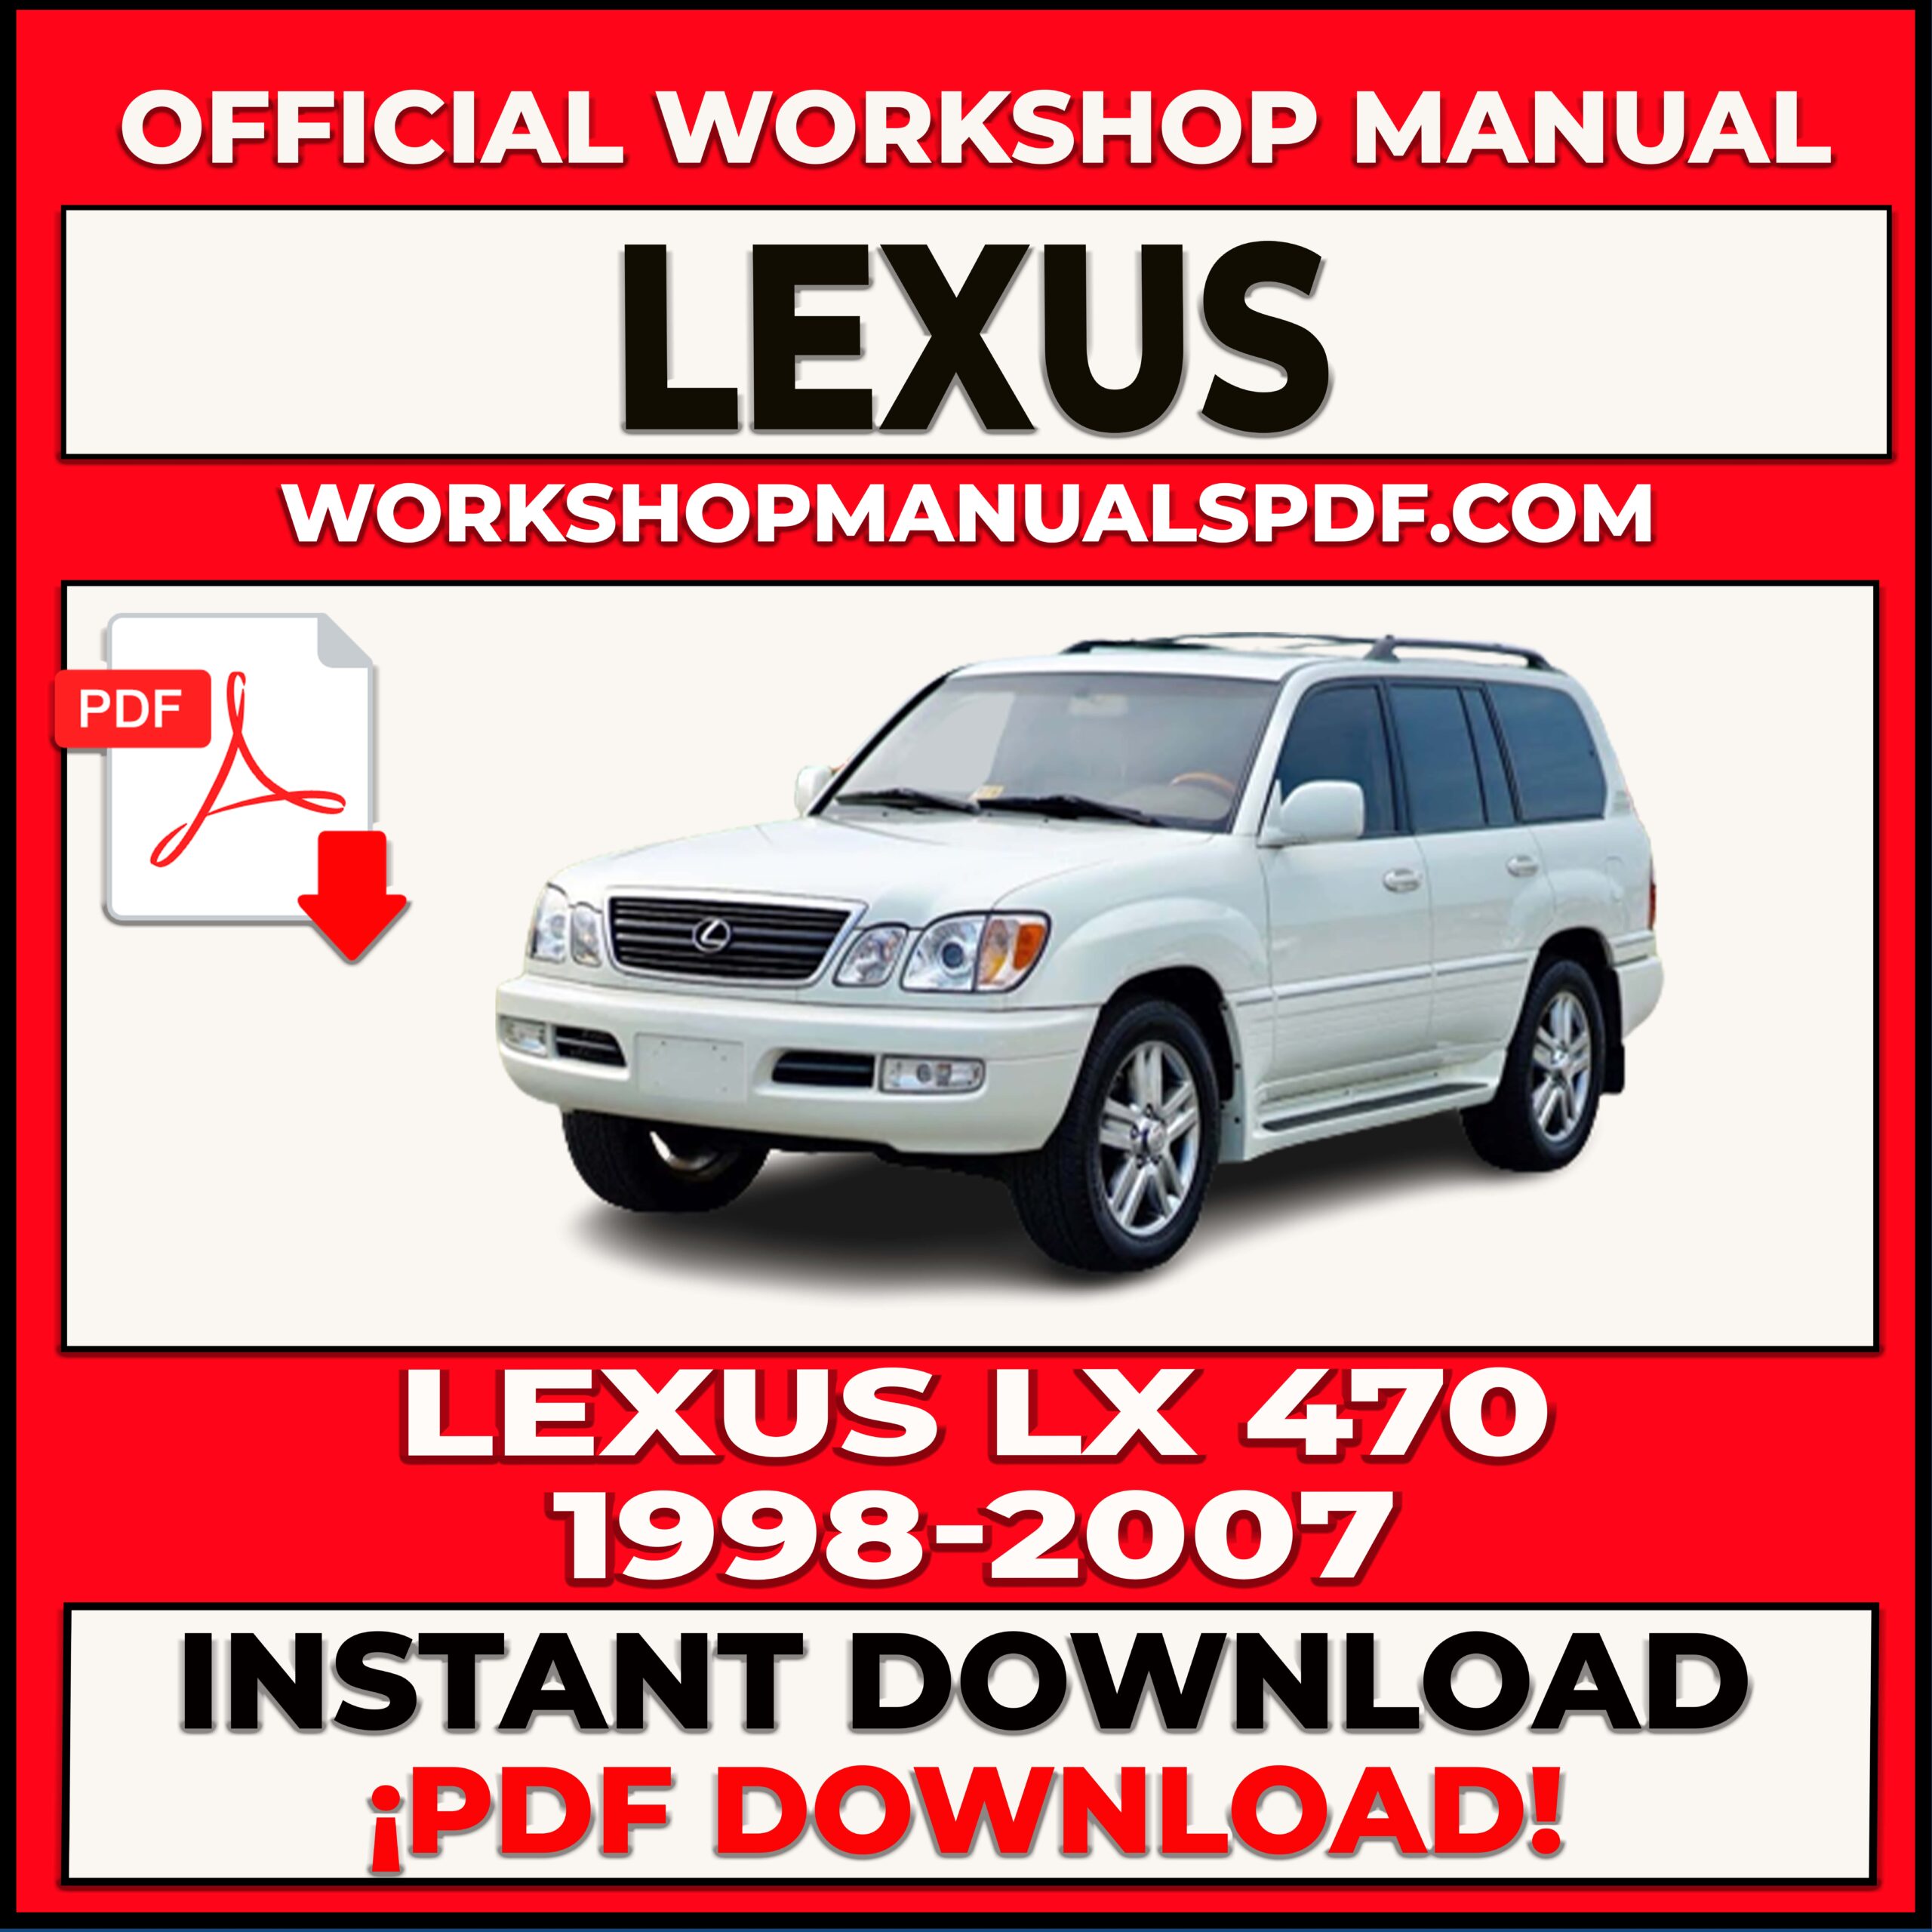 Lexus LX 470 (1998-2007) Workshop Repair Manual